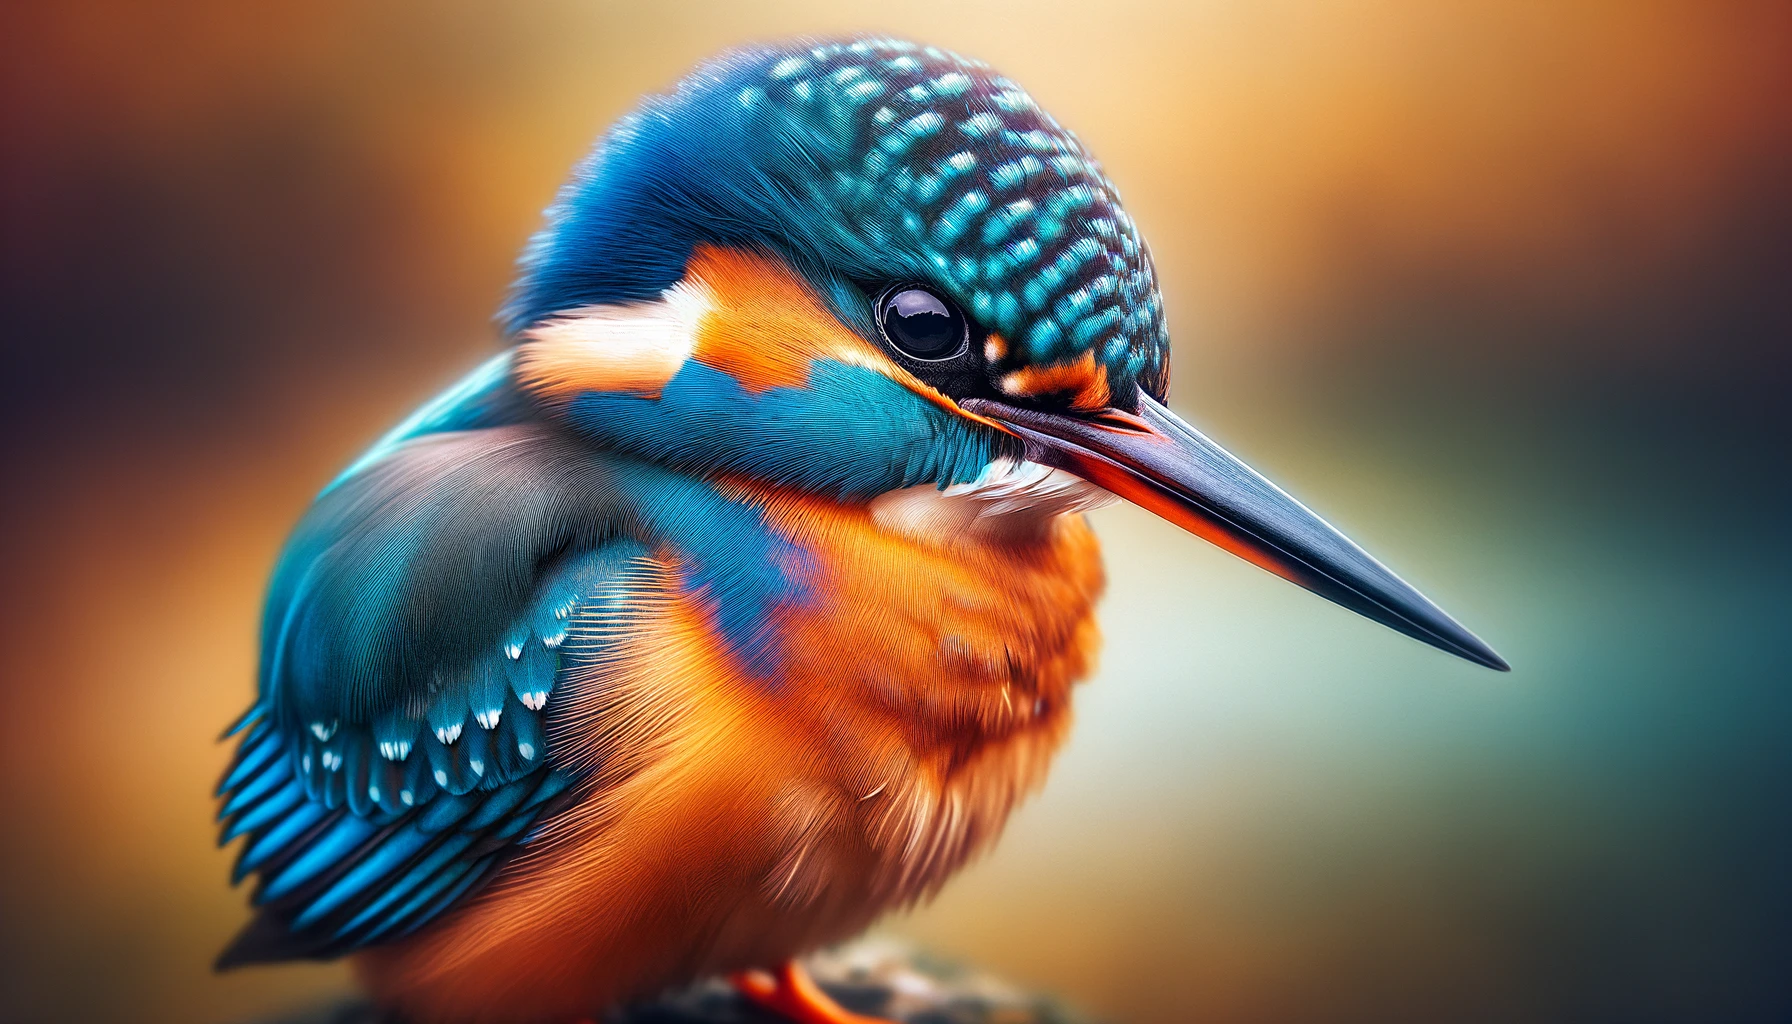 A Closeup Image of a Kingfisher